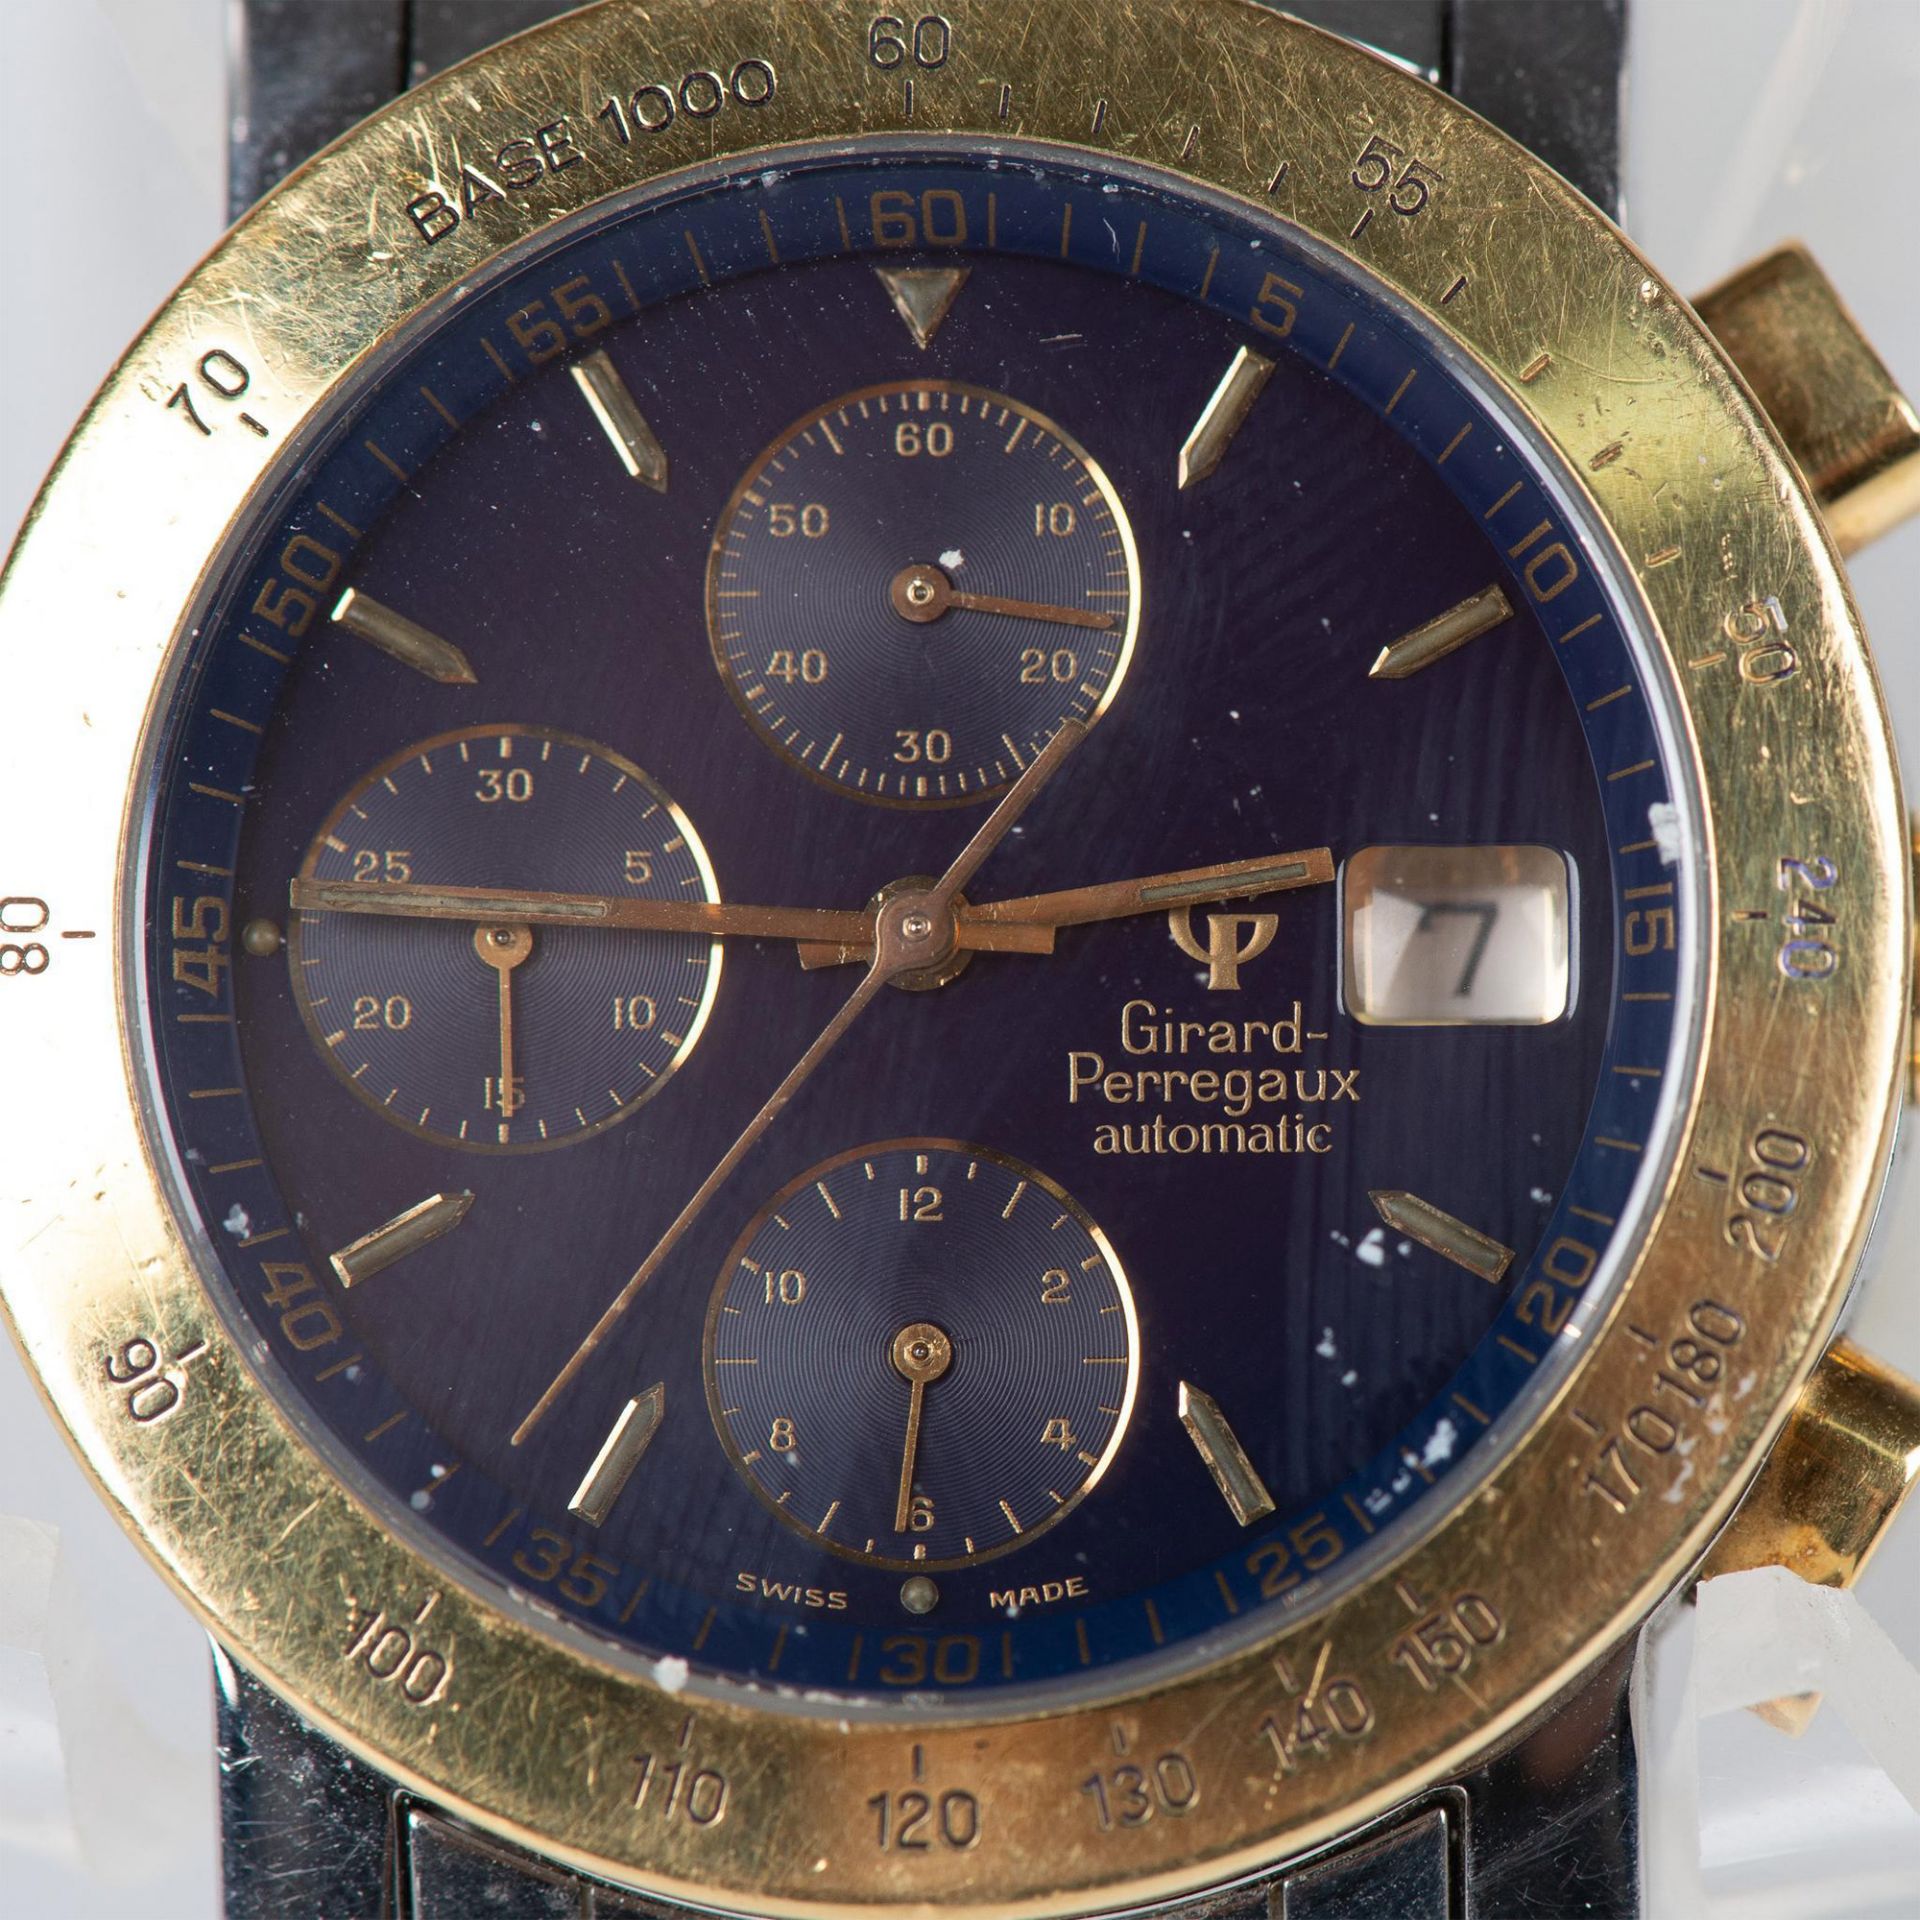 Girard Perregaux 7000 Chrono Automatic Men's Watch - Image 4 of 11